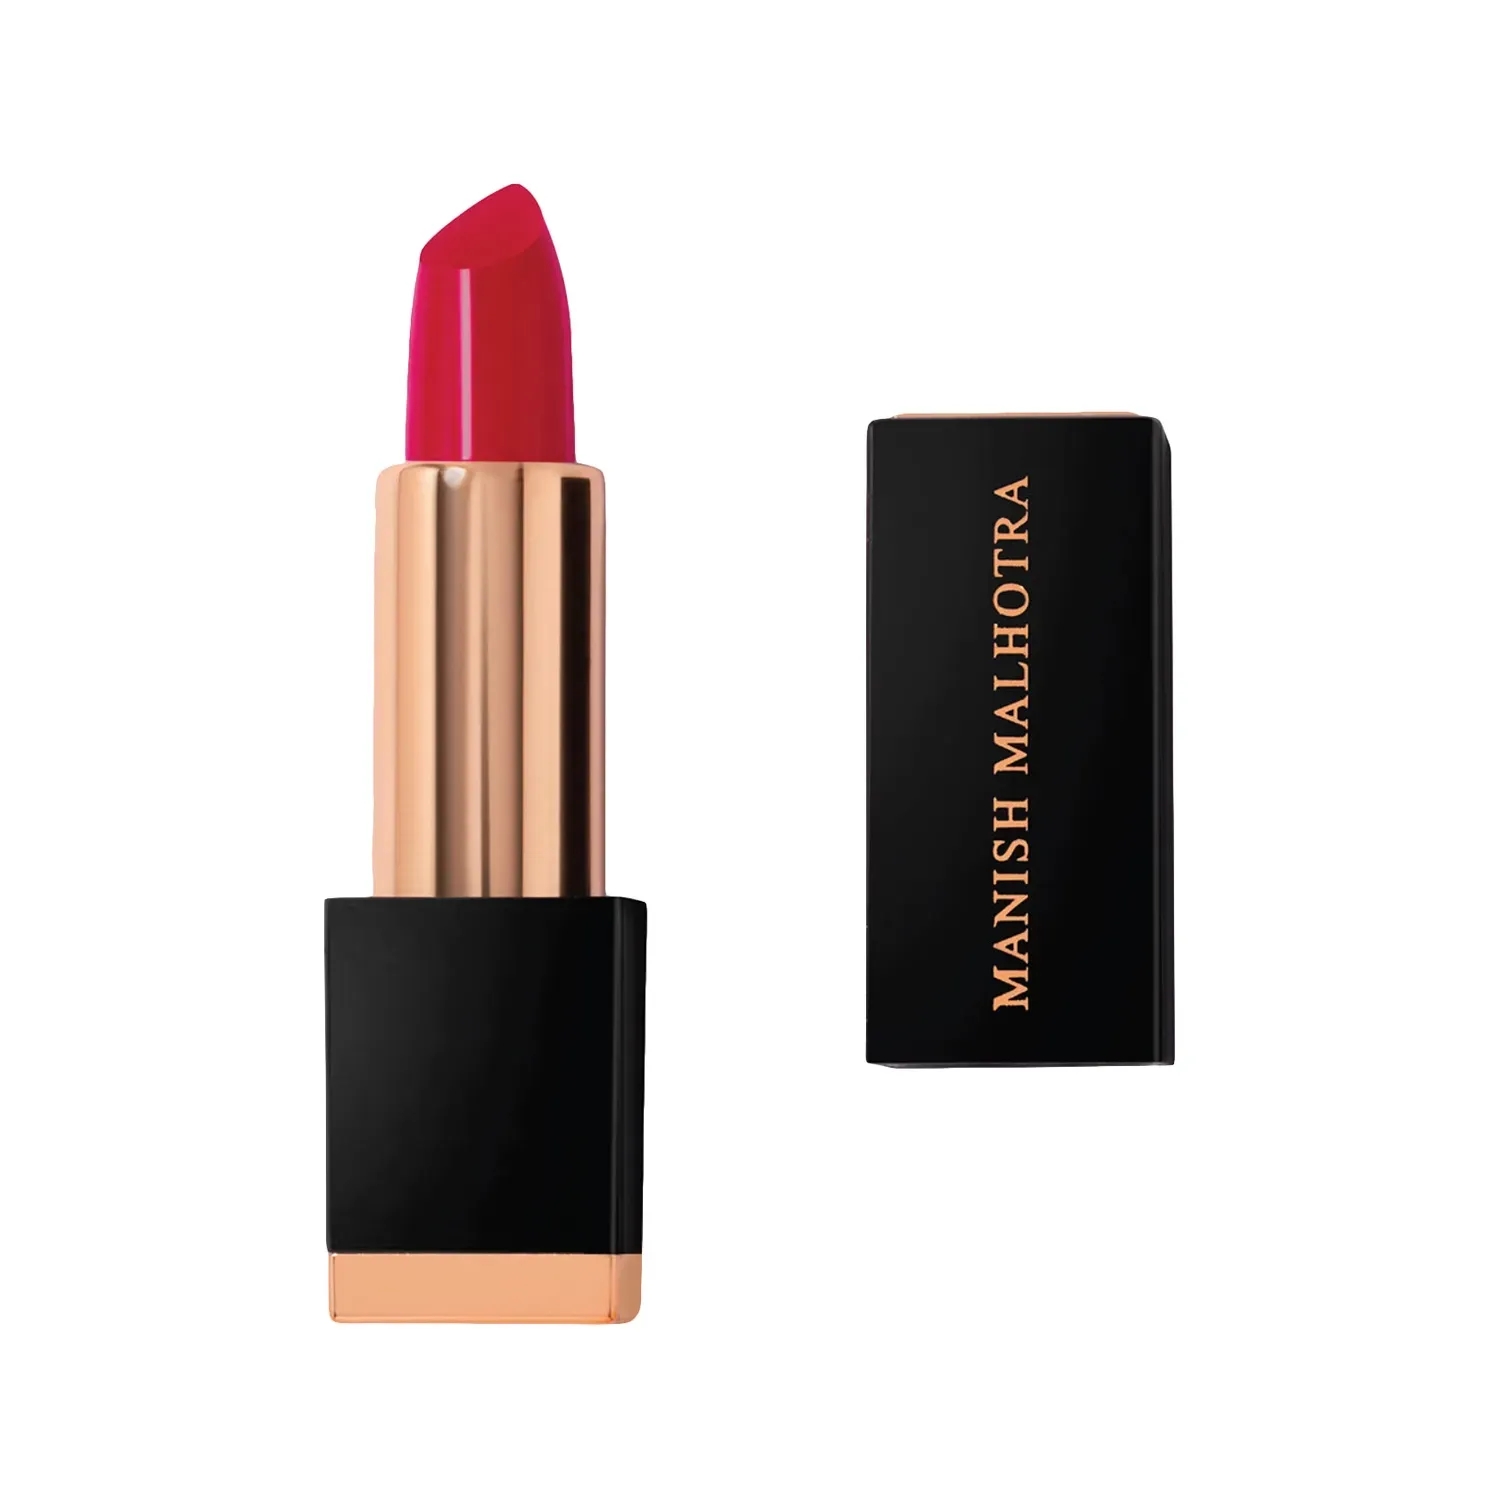 MyGlamm | MyGlamm Manish Malhotra Soft Matte Lipstick - Pink Passion (4g)